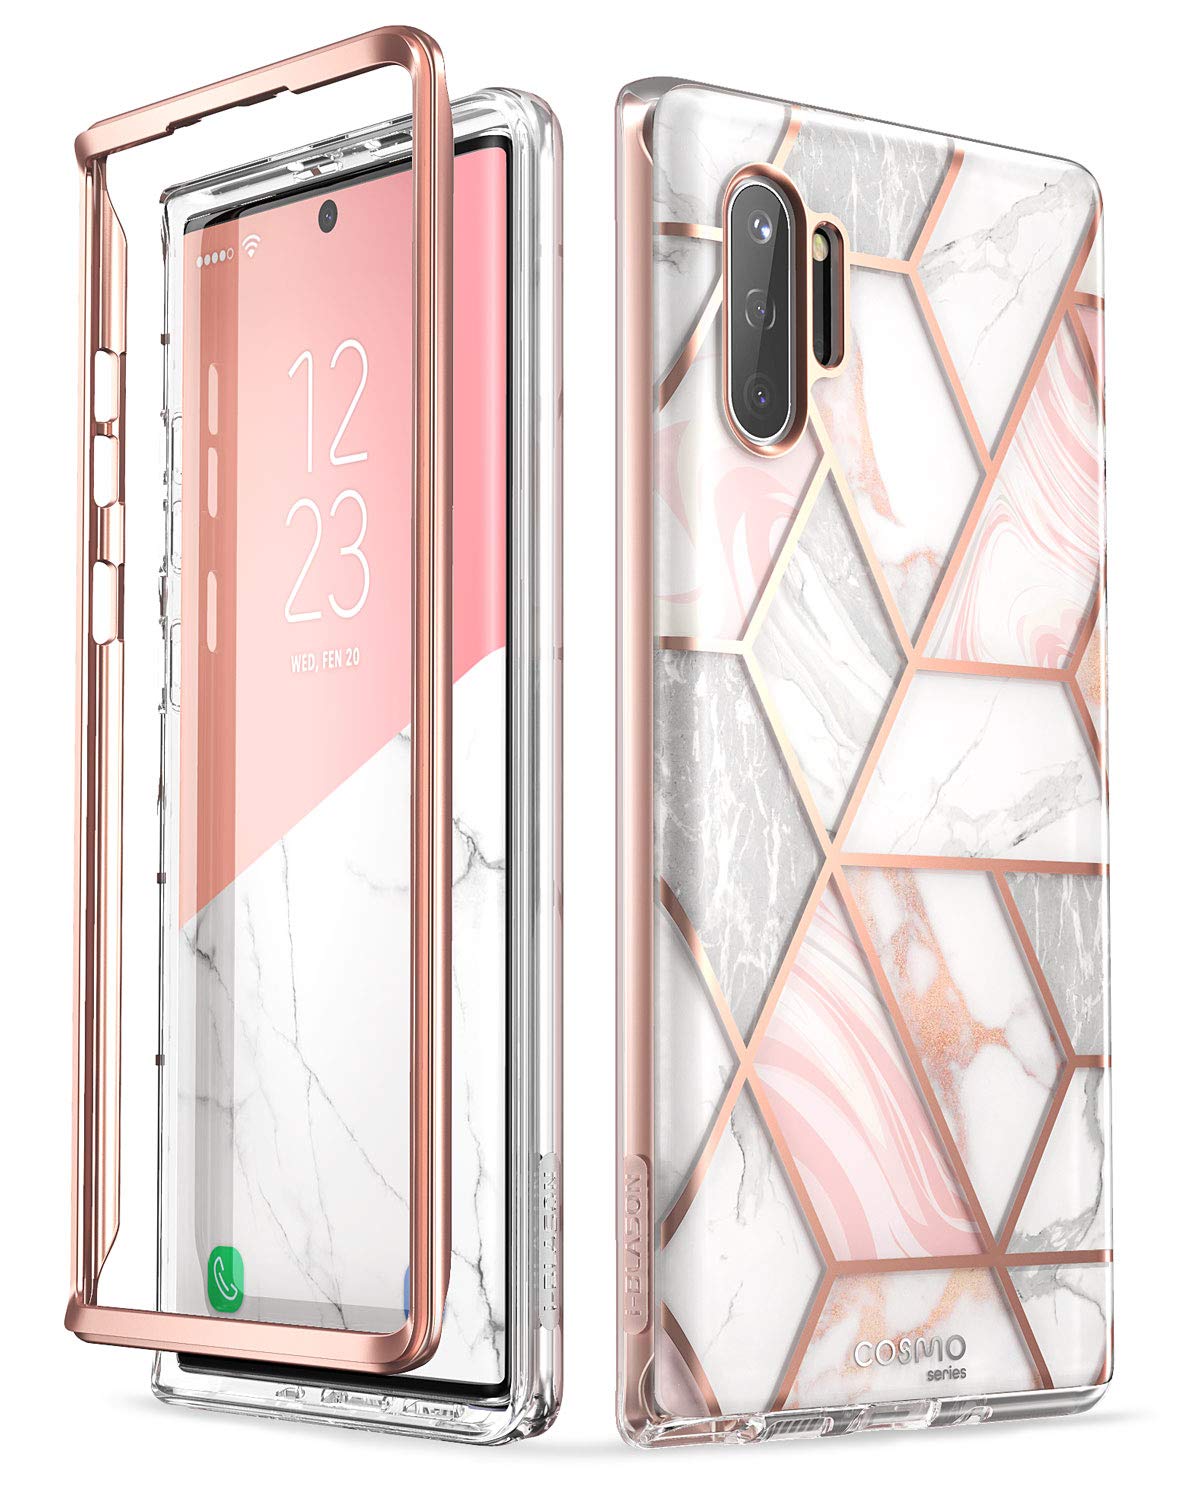 Gepanzerte Schutzhülle Supcase i-Blason Cosmo für Galaxy Note 10 Plus, rosa.